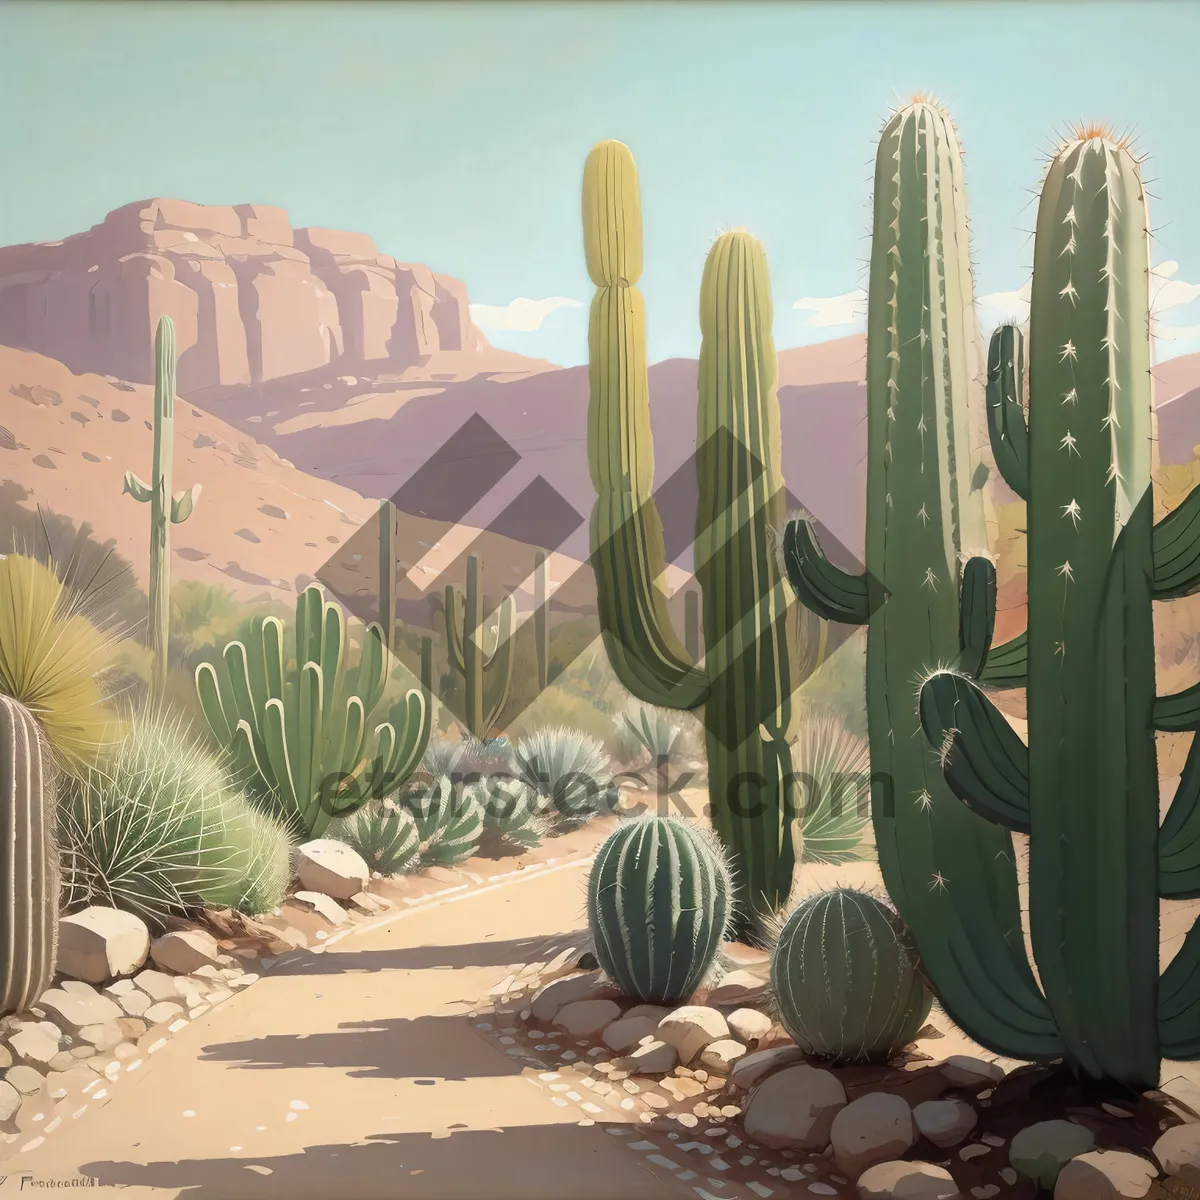 Picture of Breathtaking Desert Landscape with Majestic Saguaro Cacti